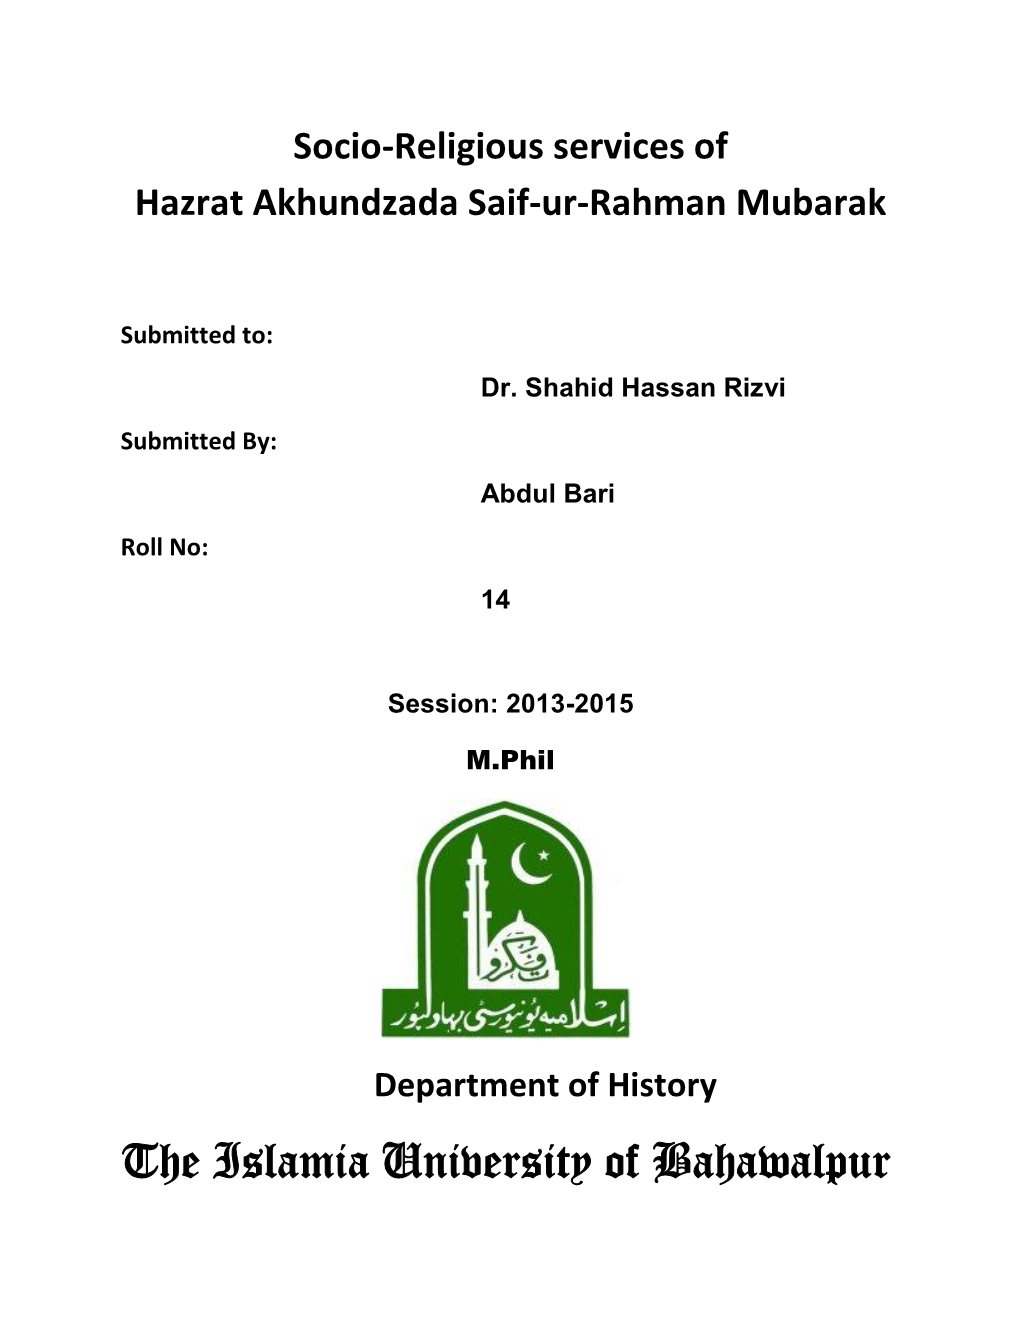 Socio-Religious Services of Hazrat Akhundzada Saif-Ur-Rahman Mubarak